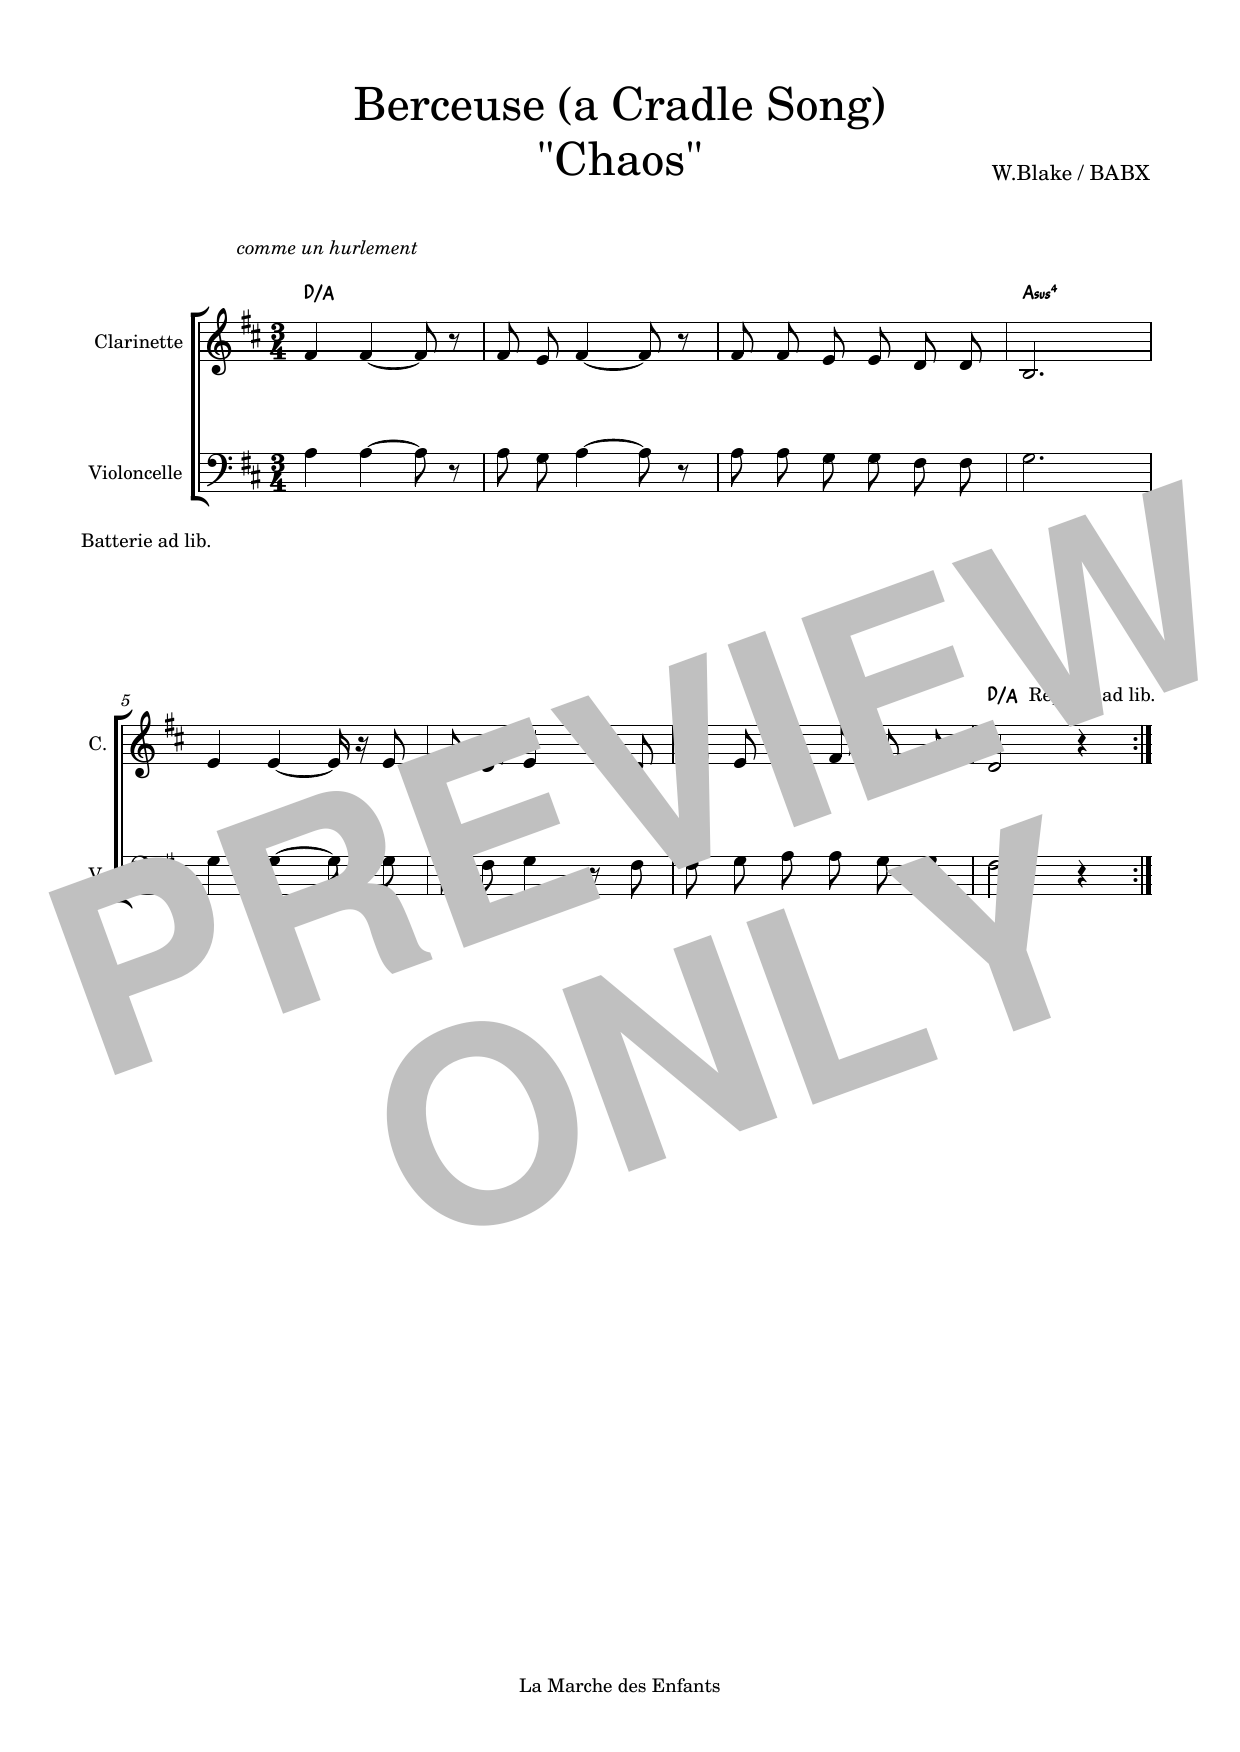 David Babin (Babx) Berceuse (A Cradle Song) Chaos sheet music notes printable PDF score